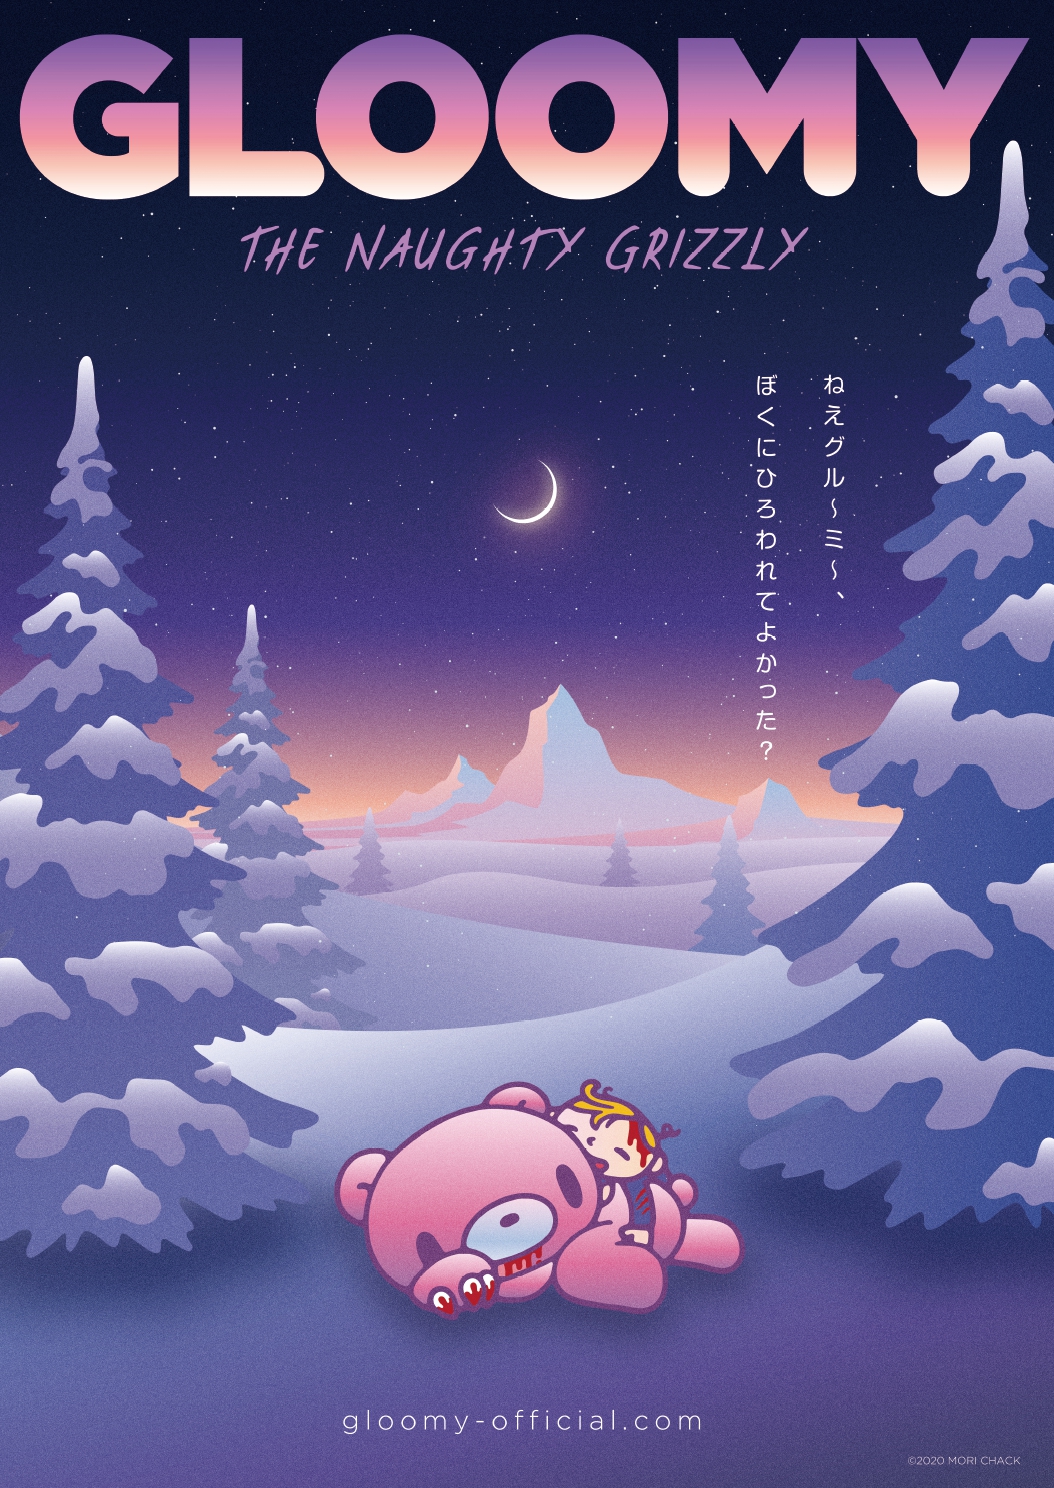 gloomy_snow GLOOMY The Naughty Grizzly